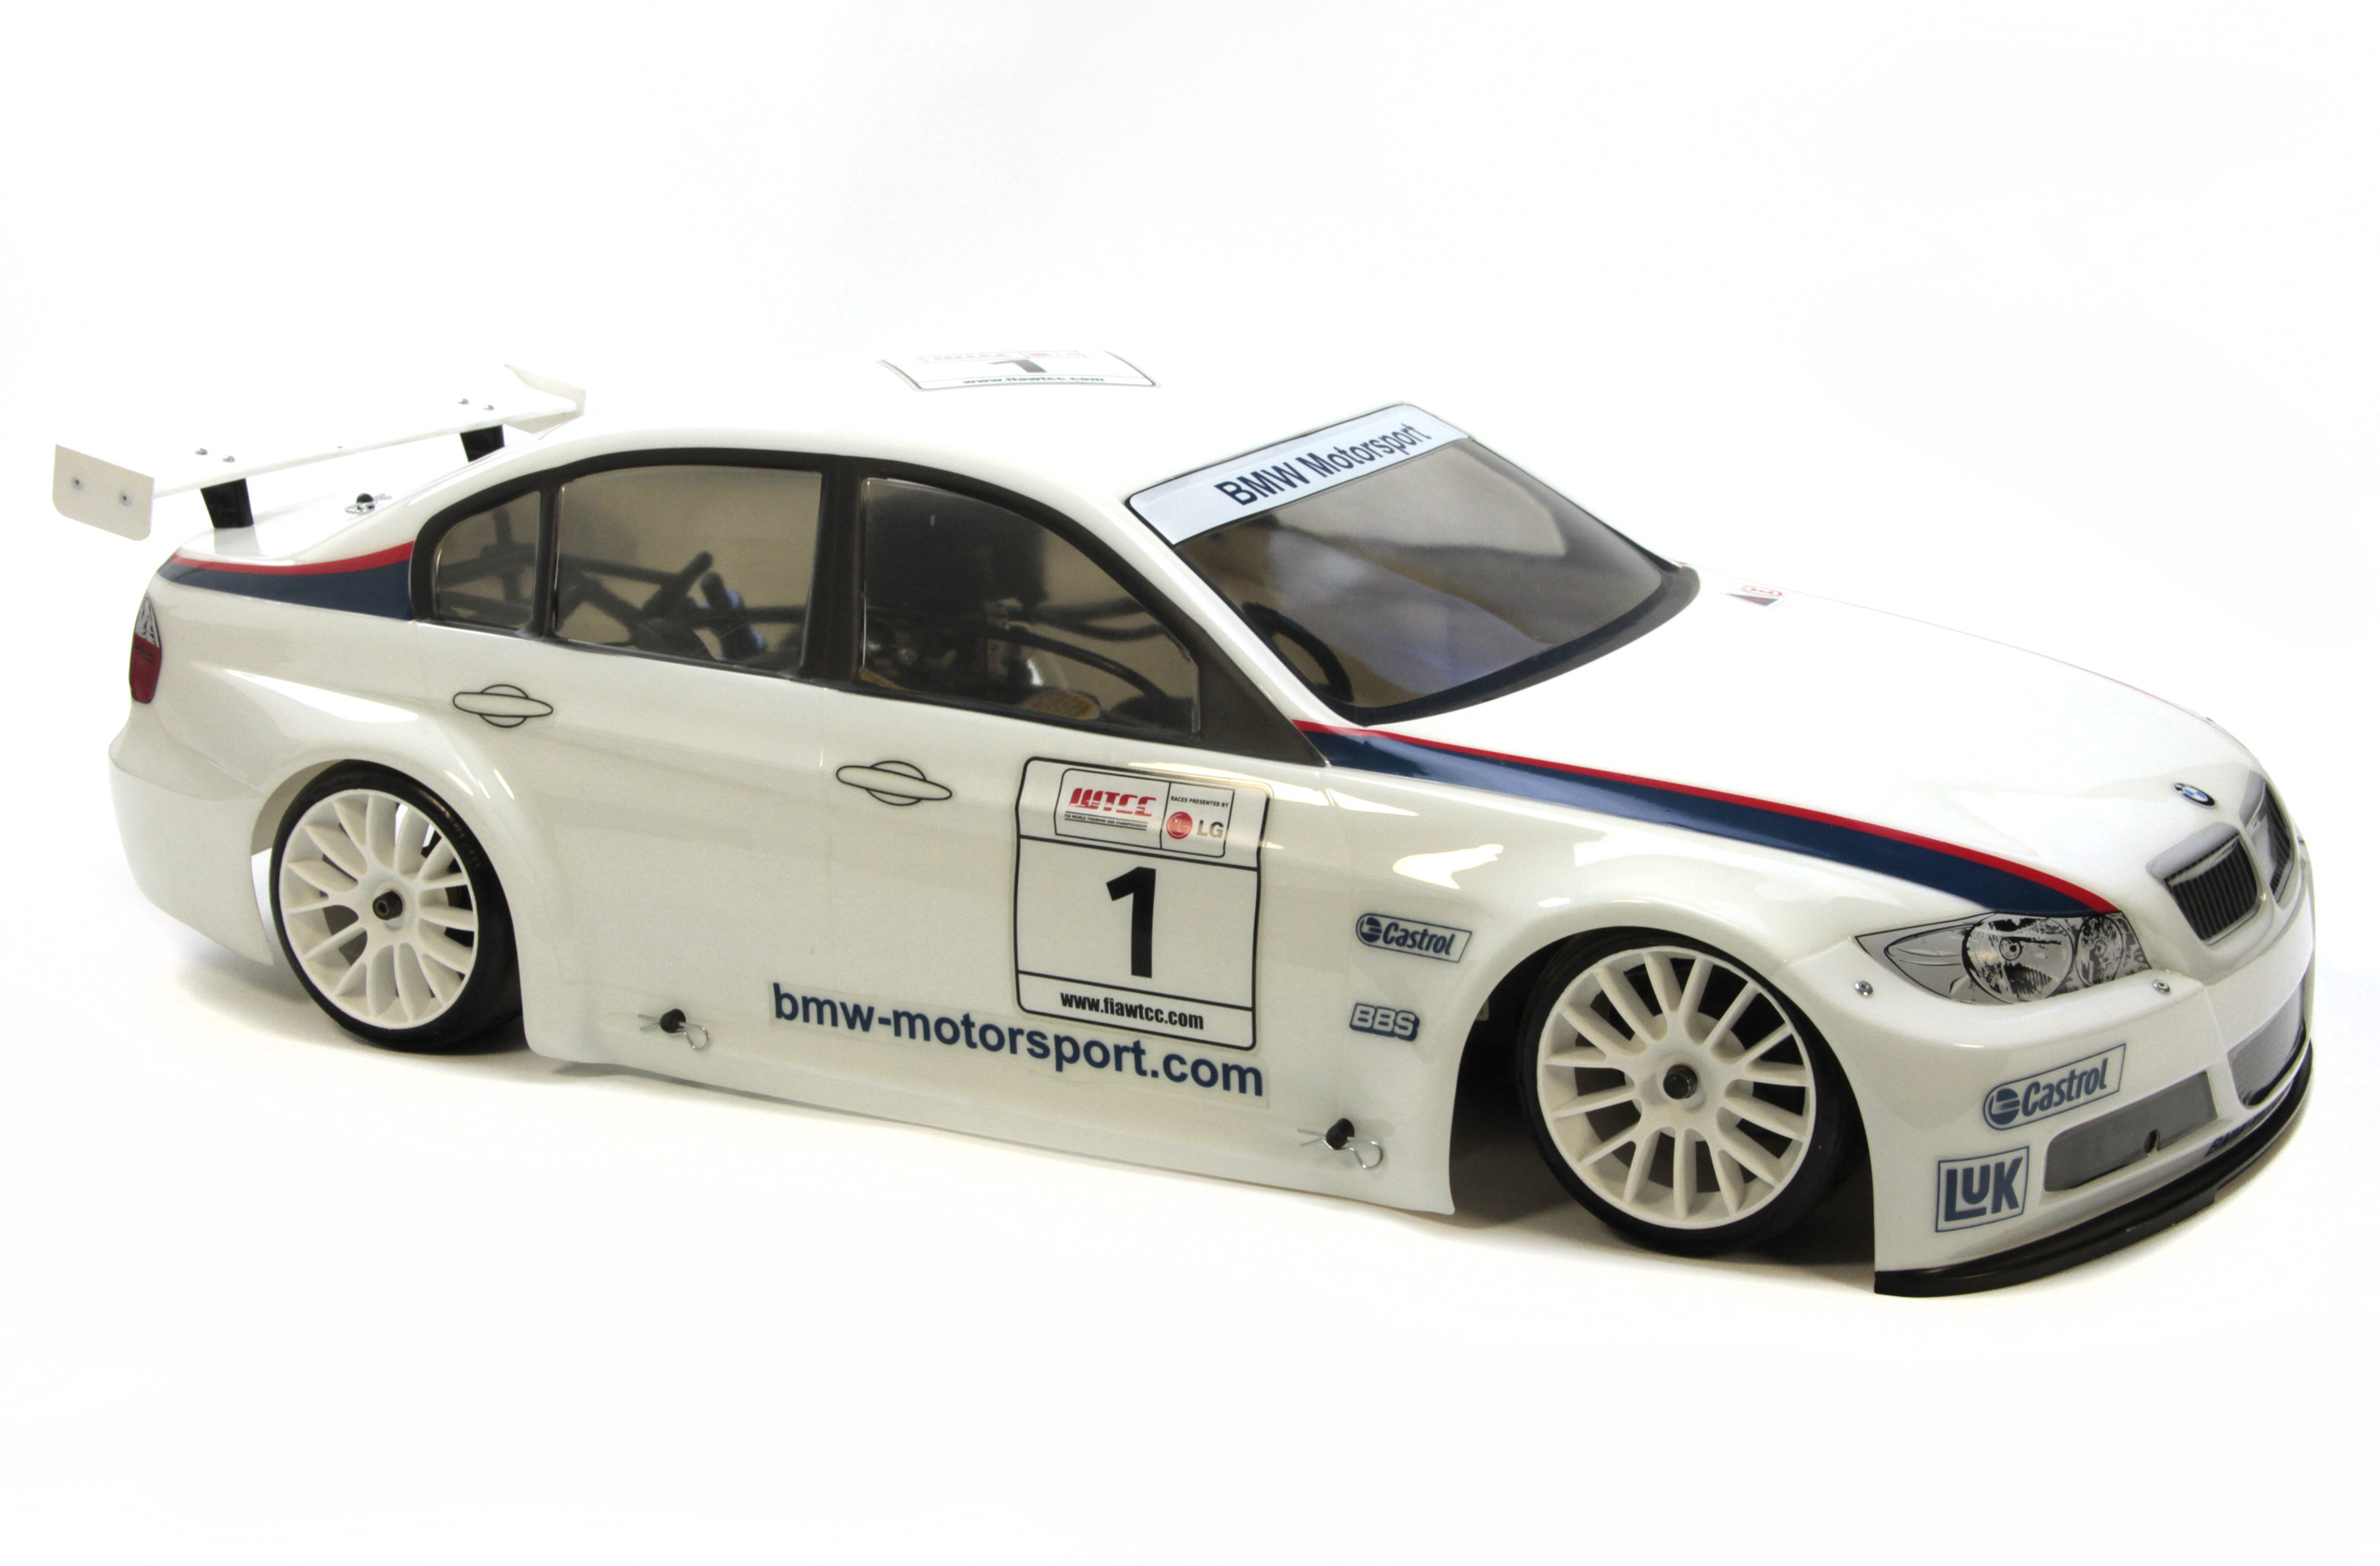 FG Raceline mit BMW 320si Karosserie